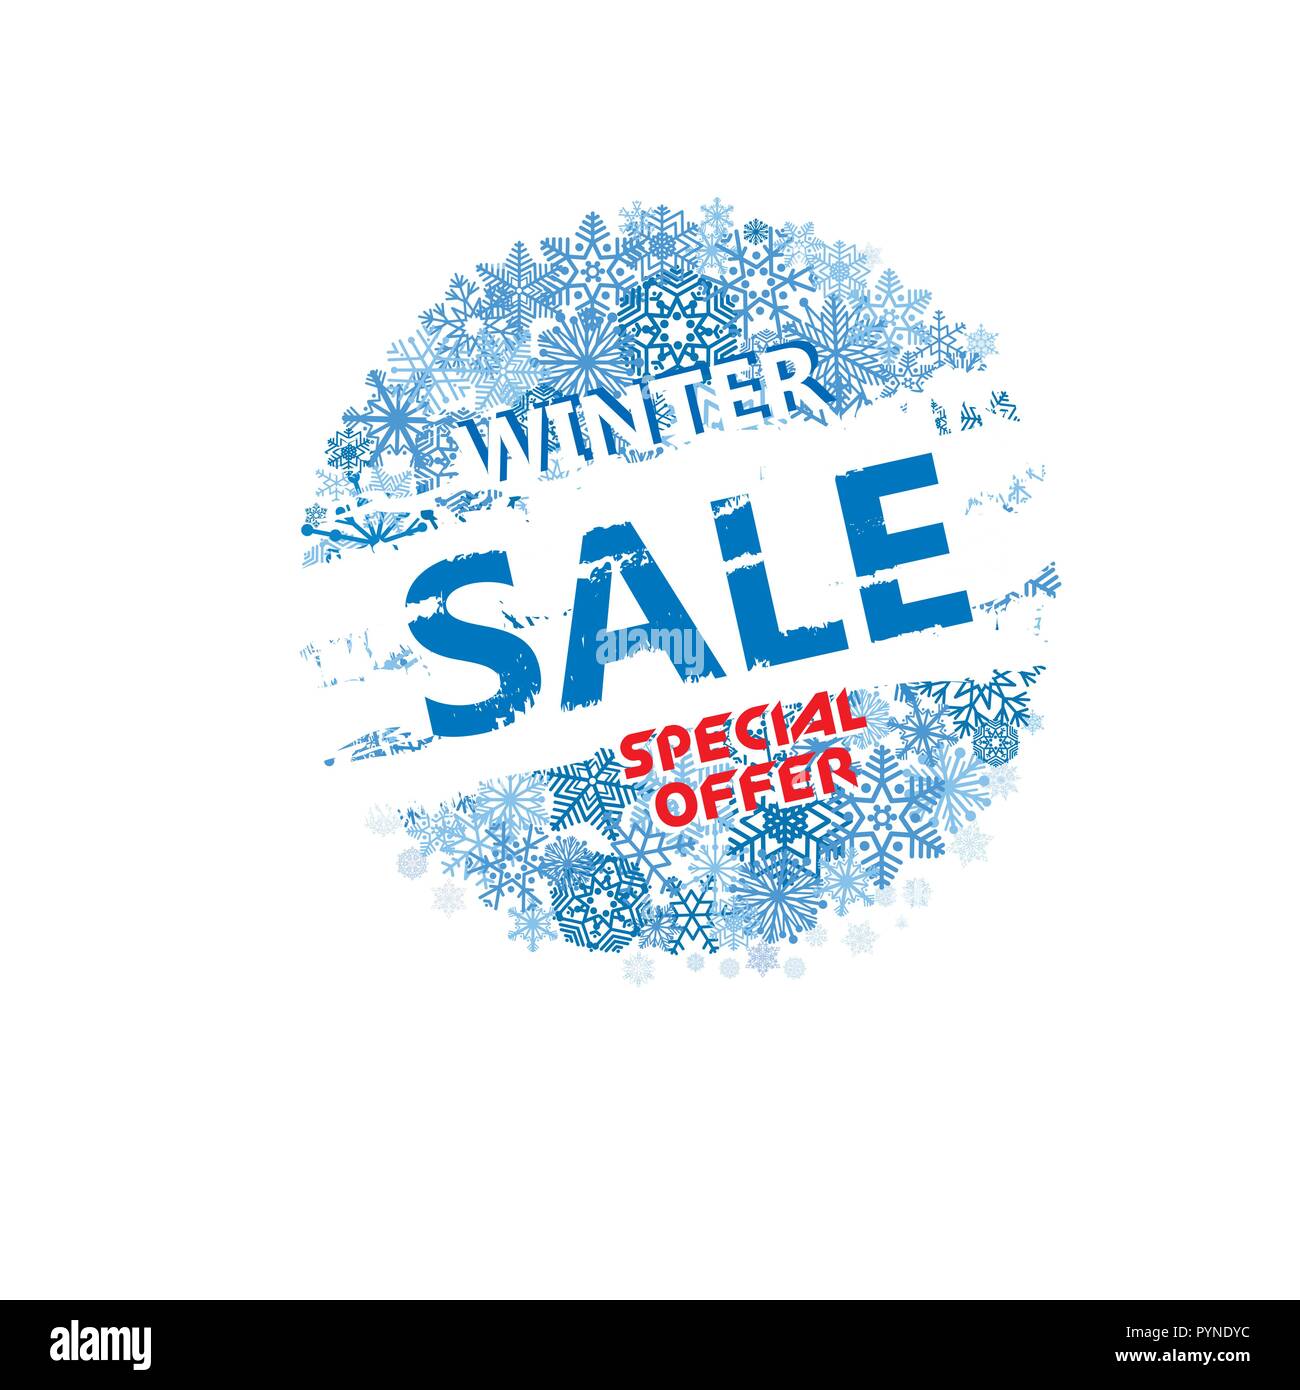 Winter sale promotion stock illustration. Illustration of icons - 79976288